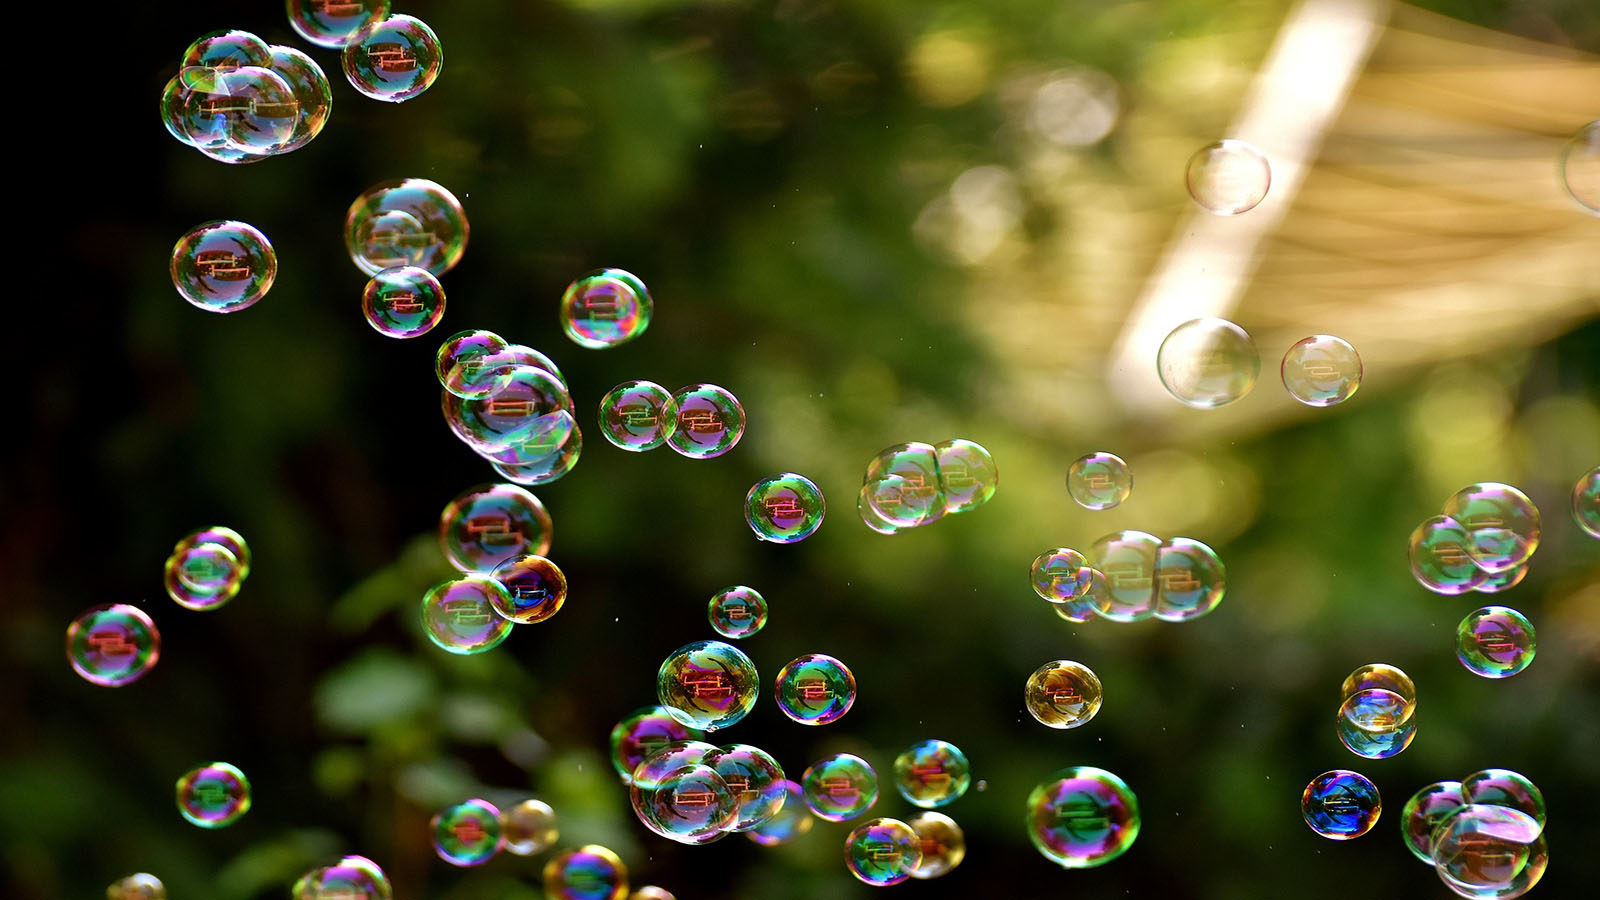 A mountain of bubbles